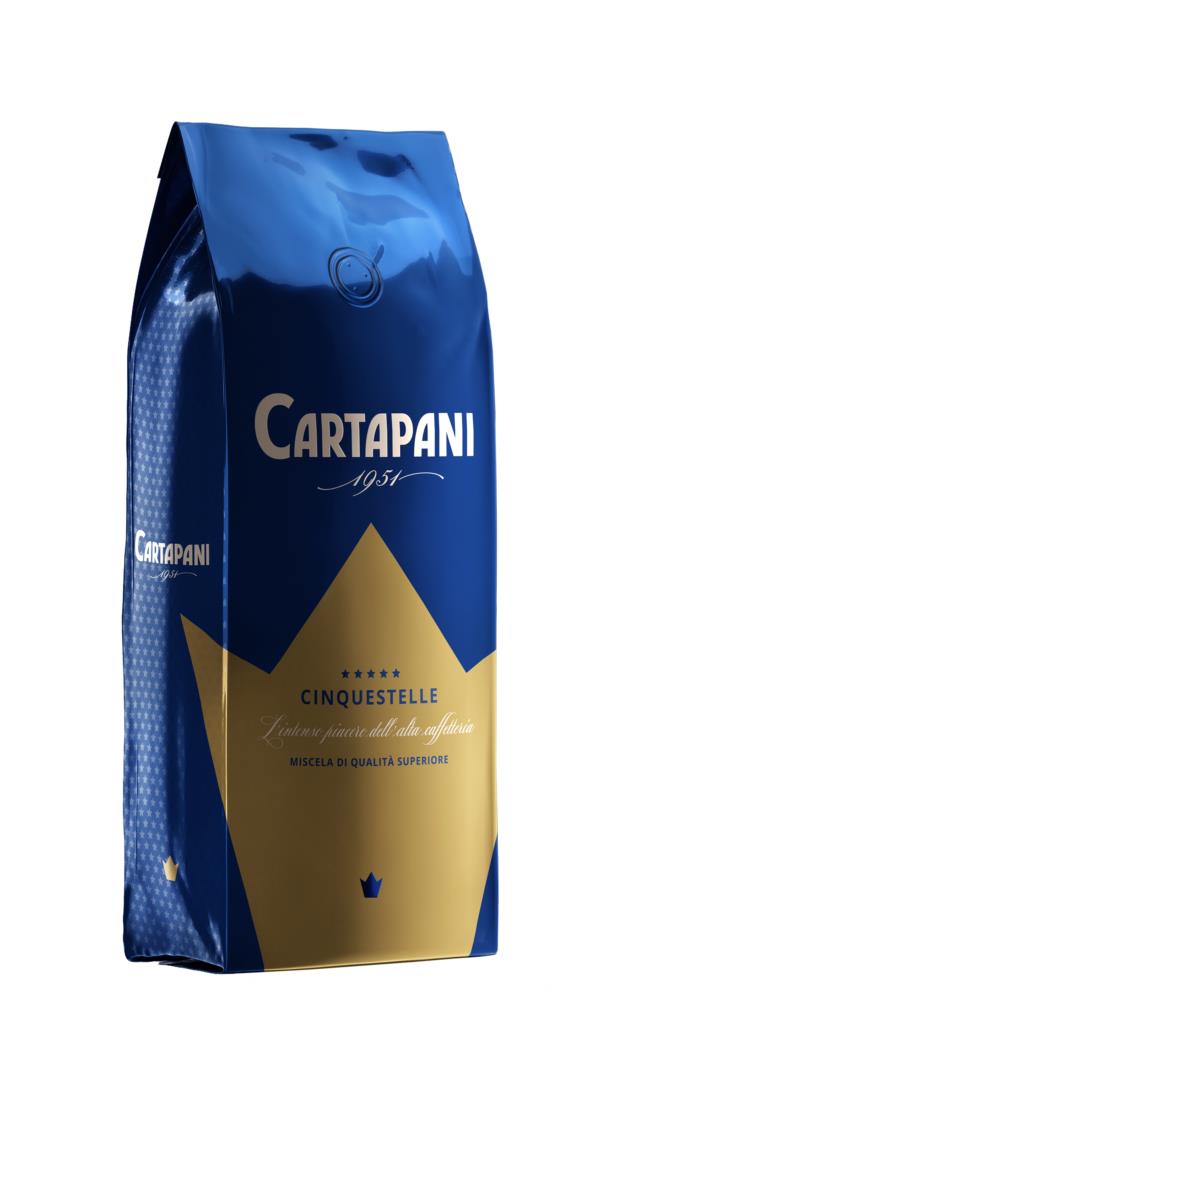 Caffè Cartapani - Cinquestelle - 1000g Beutel - Bohnen